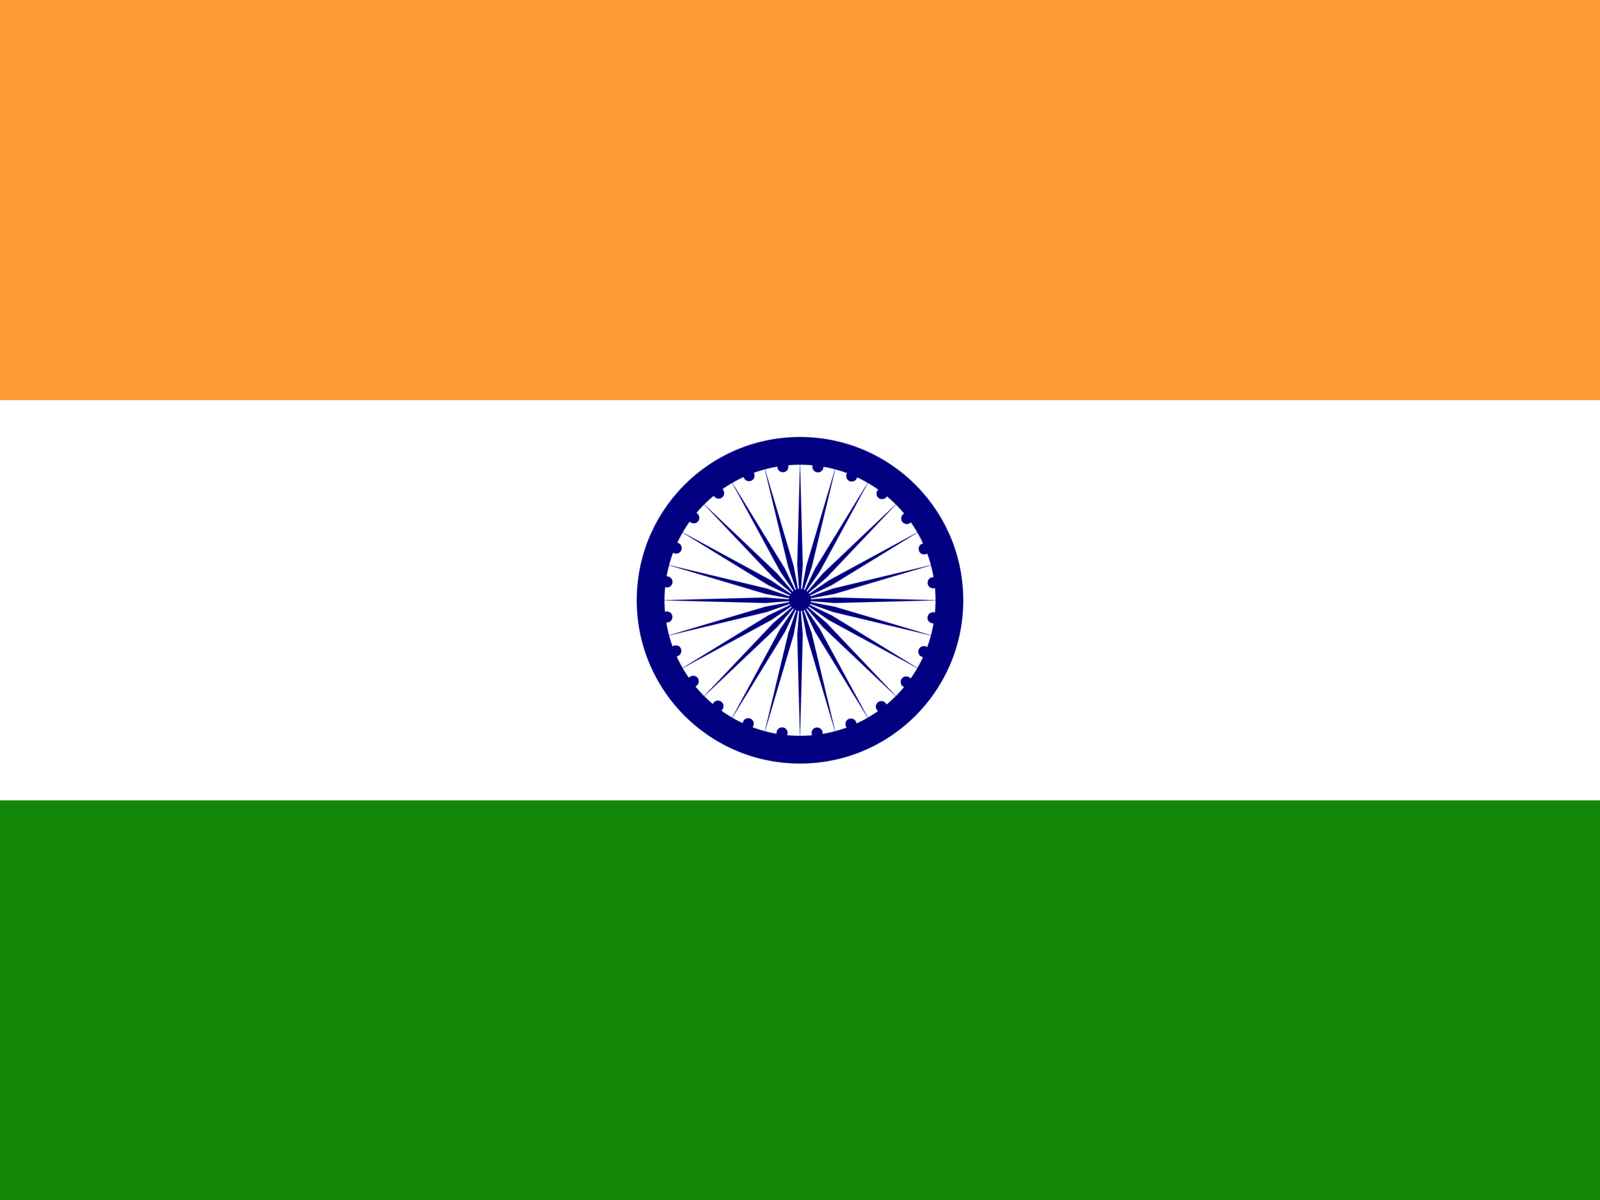 Indian Flag by Kishan Thobhani on Dribbble